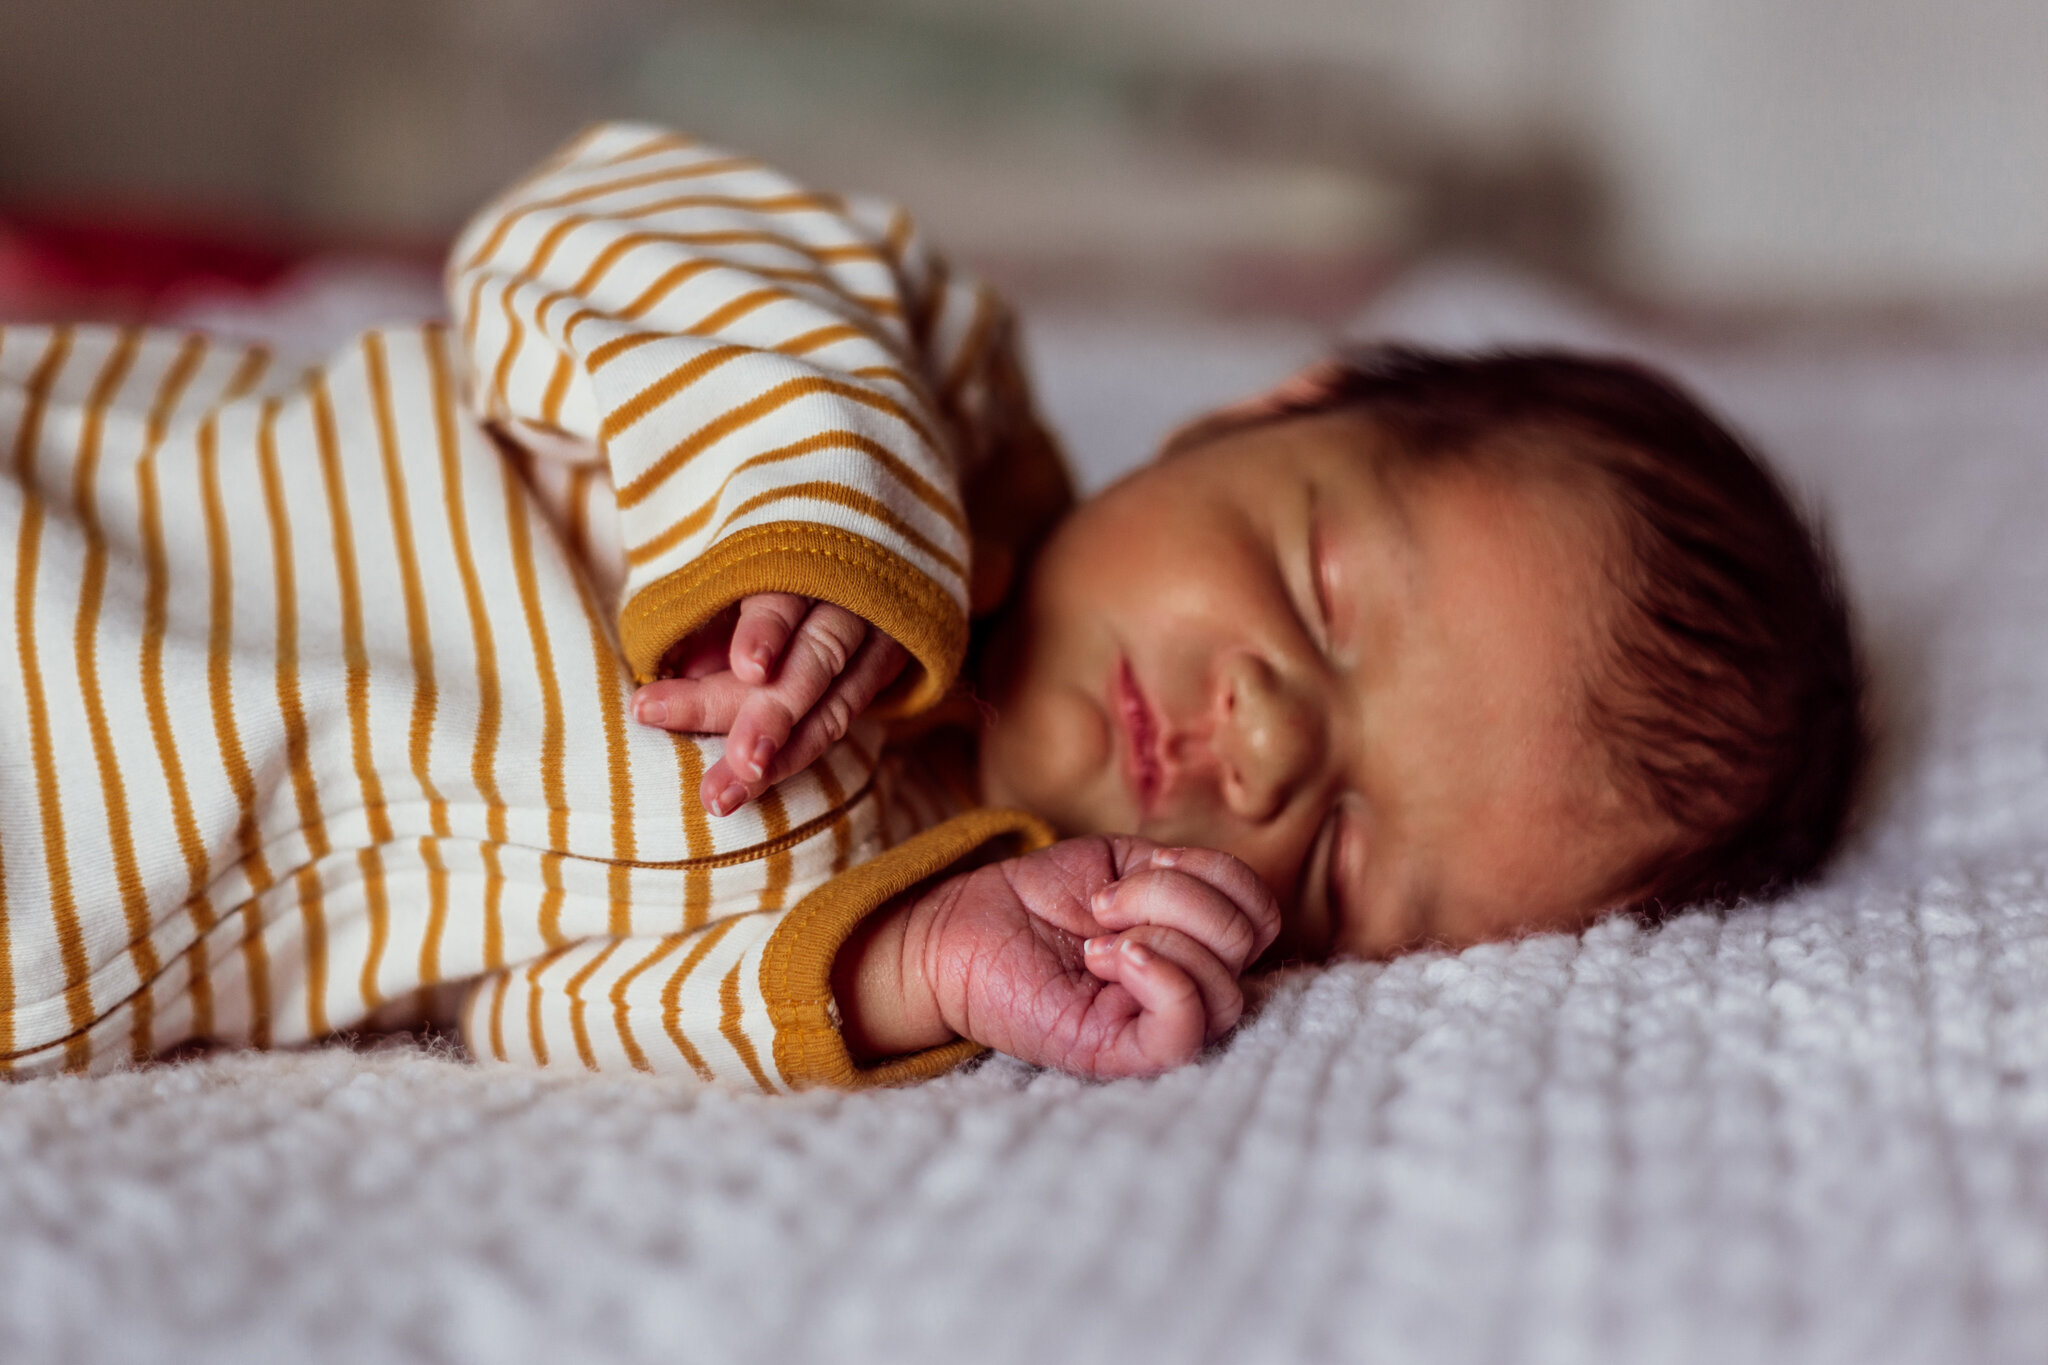 central-virginia-newborn-photography-7633.jpg